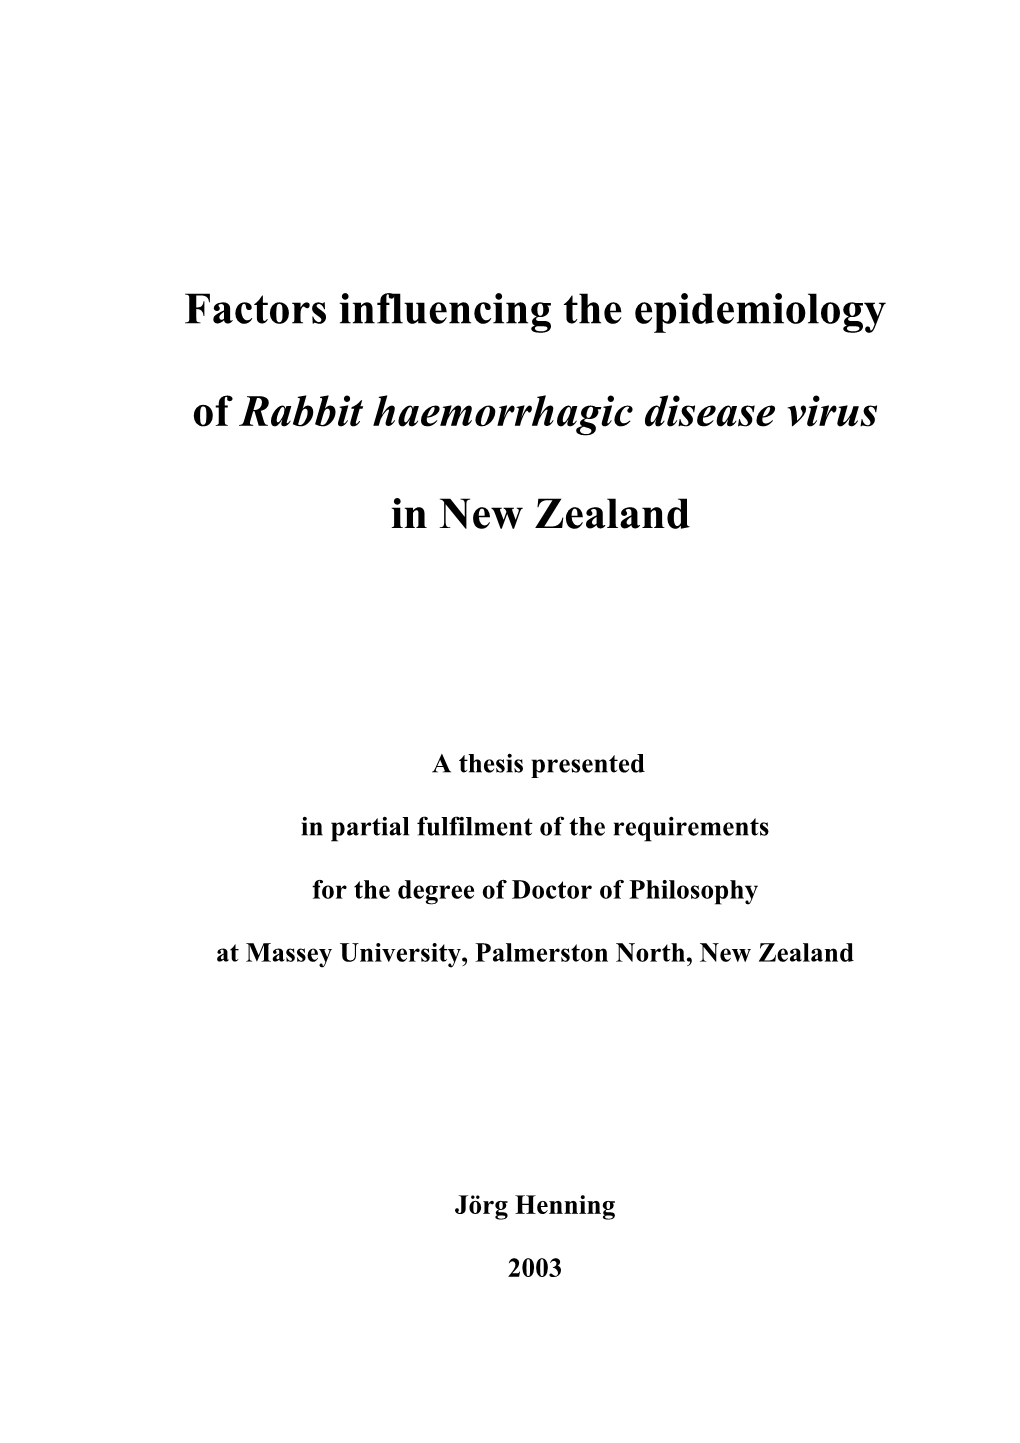 The Epidemiology of Rabbit Haemorrhagic Disease Virus In